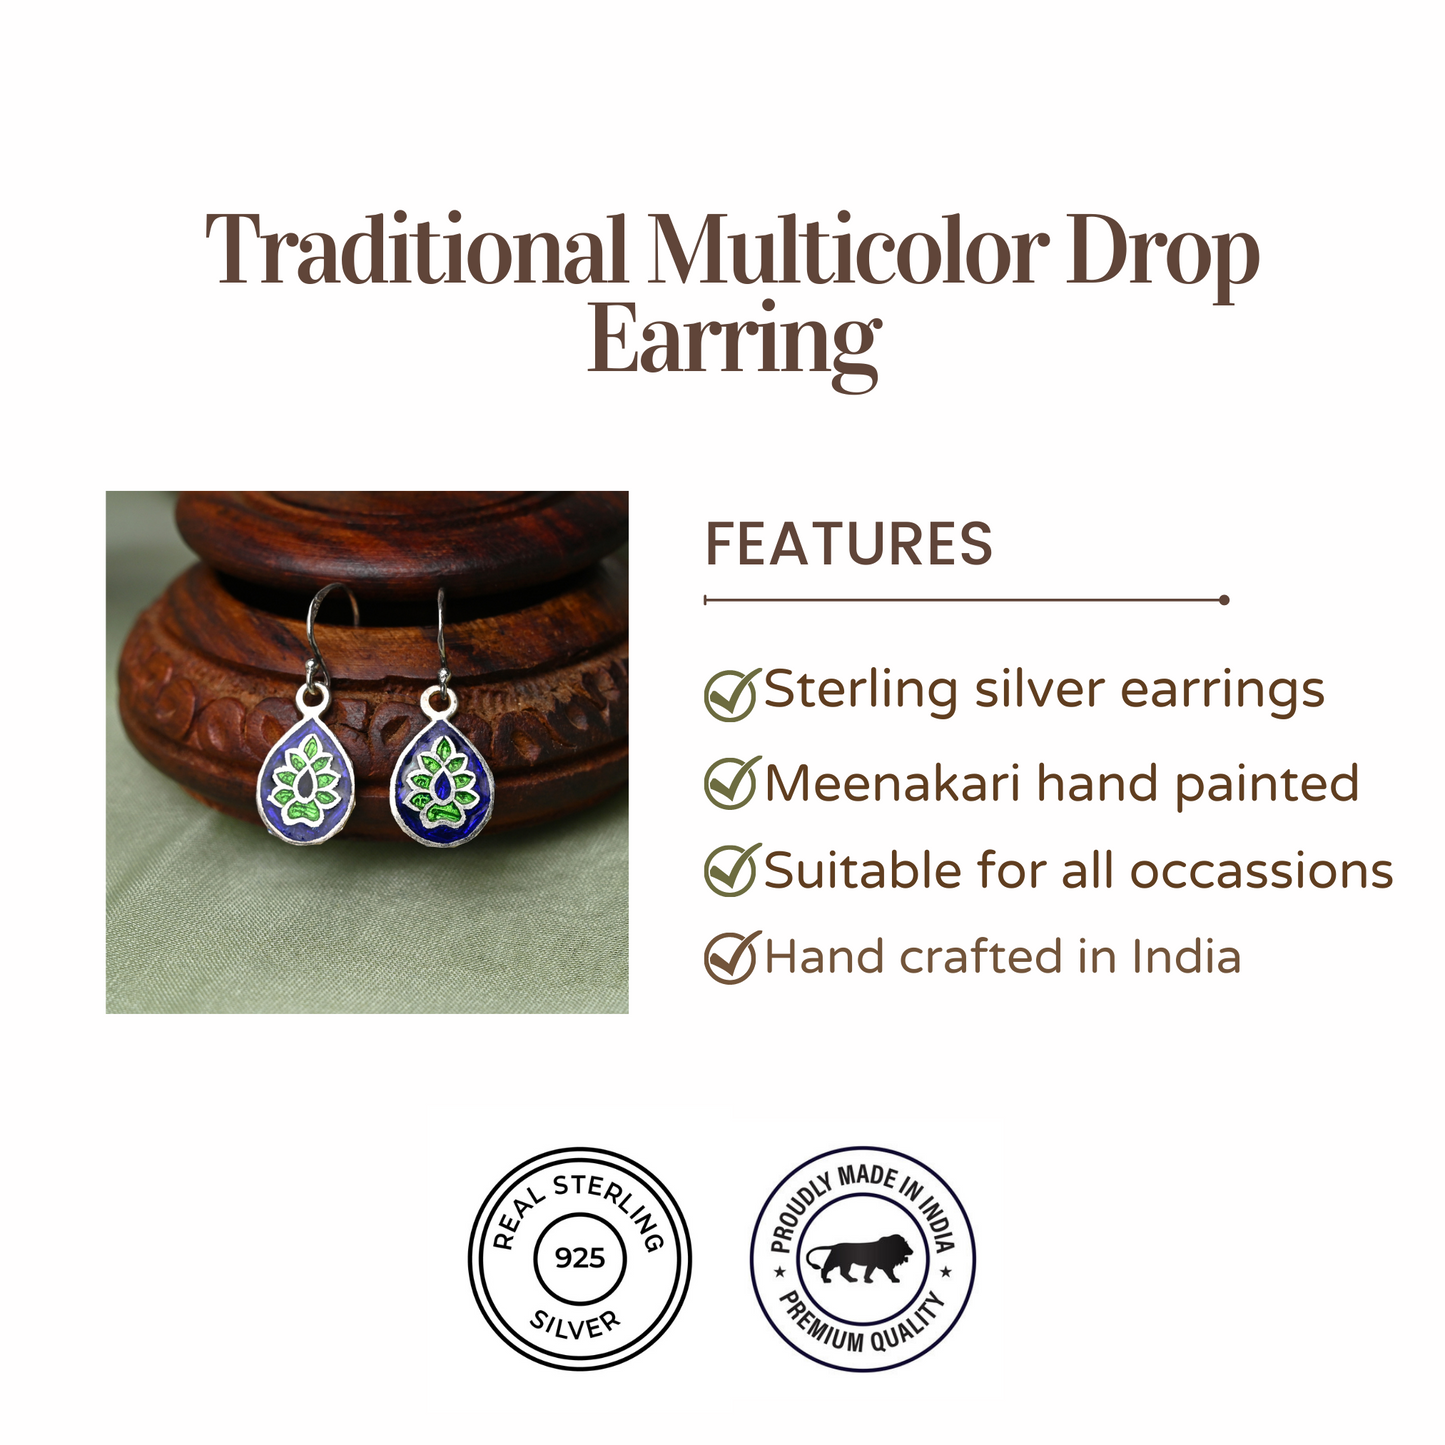 Traditional Multicolor Drop Earrings